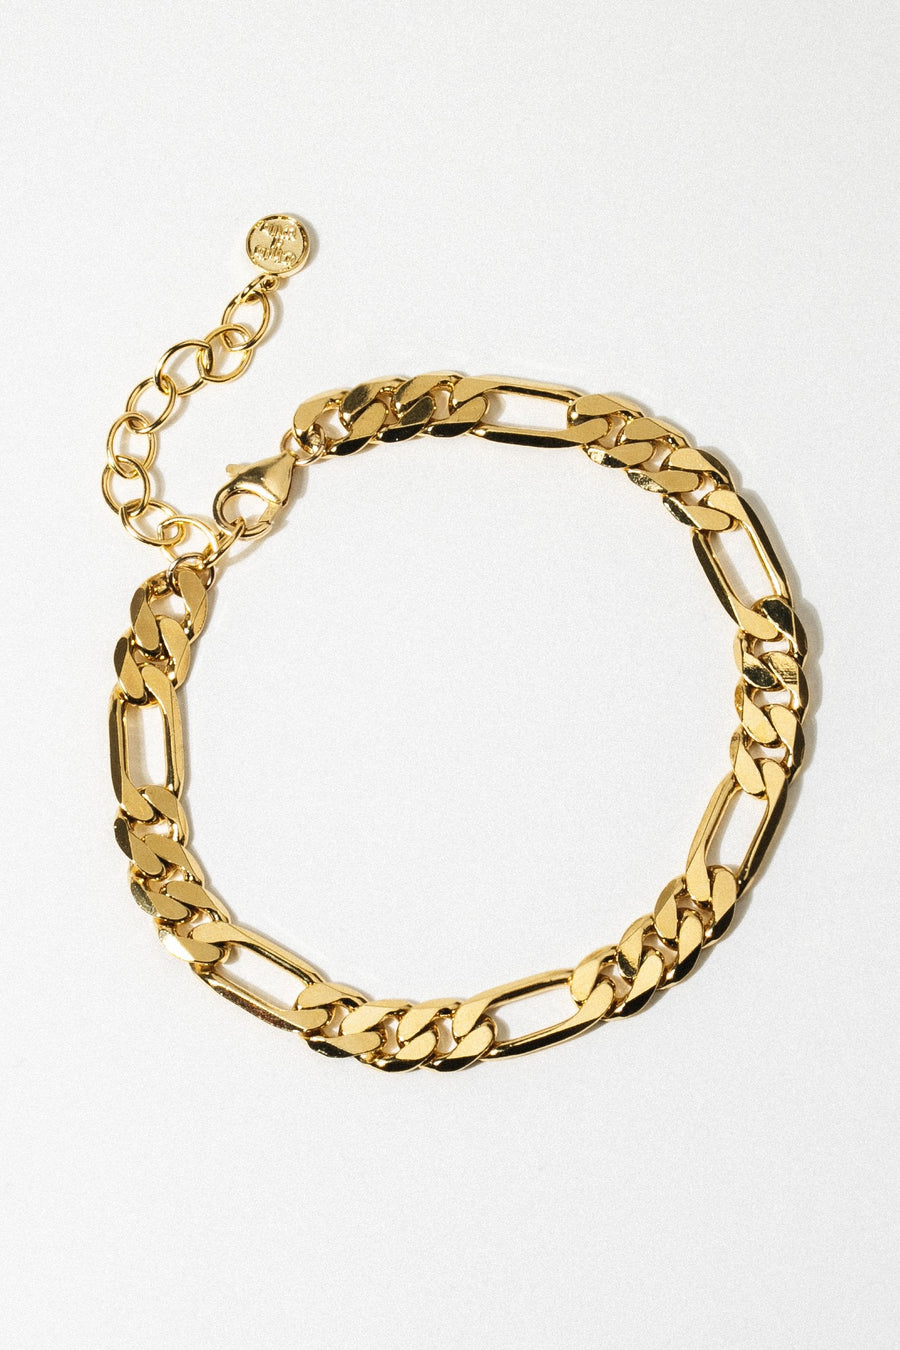 Goddess Jewelry Gold aCW009